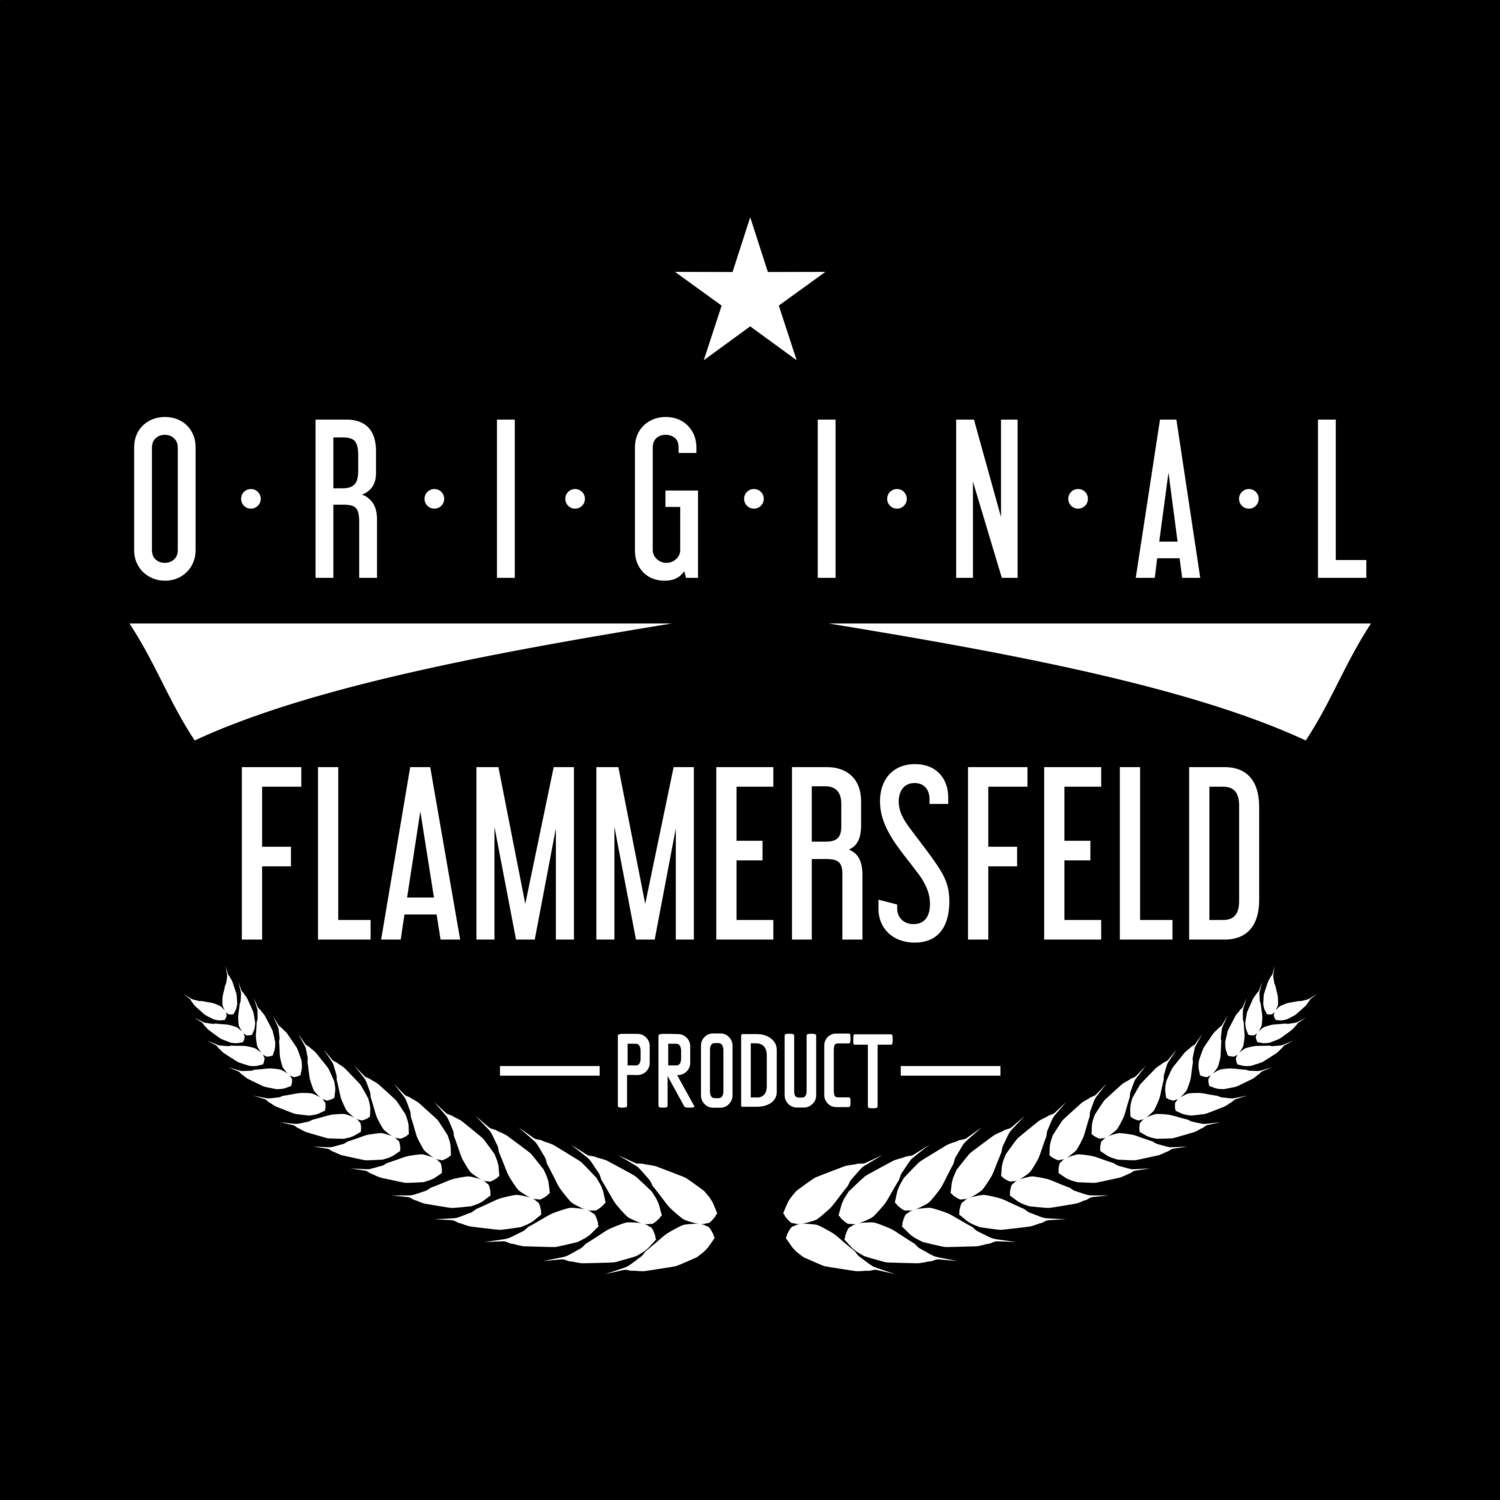 Flammersfeld T-Shirt »Original Product«